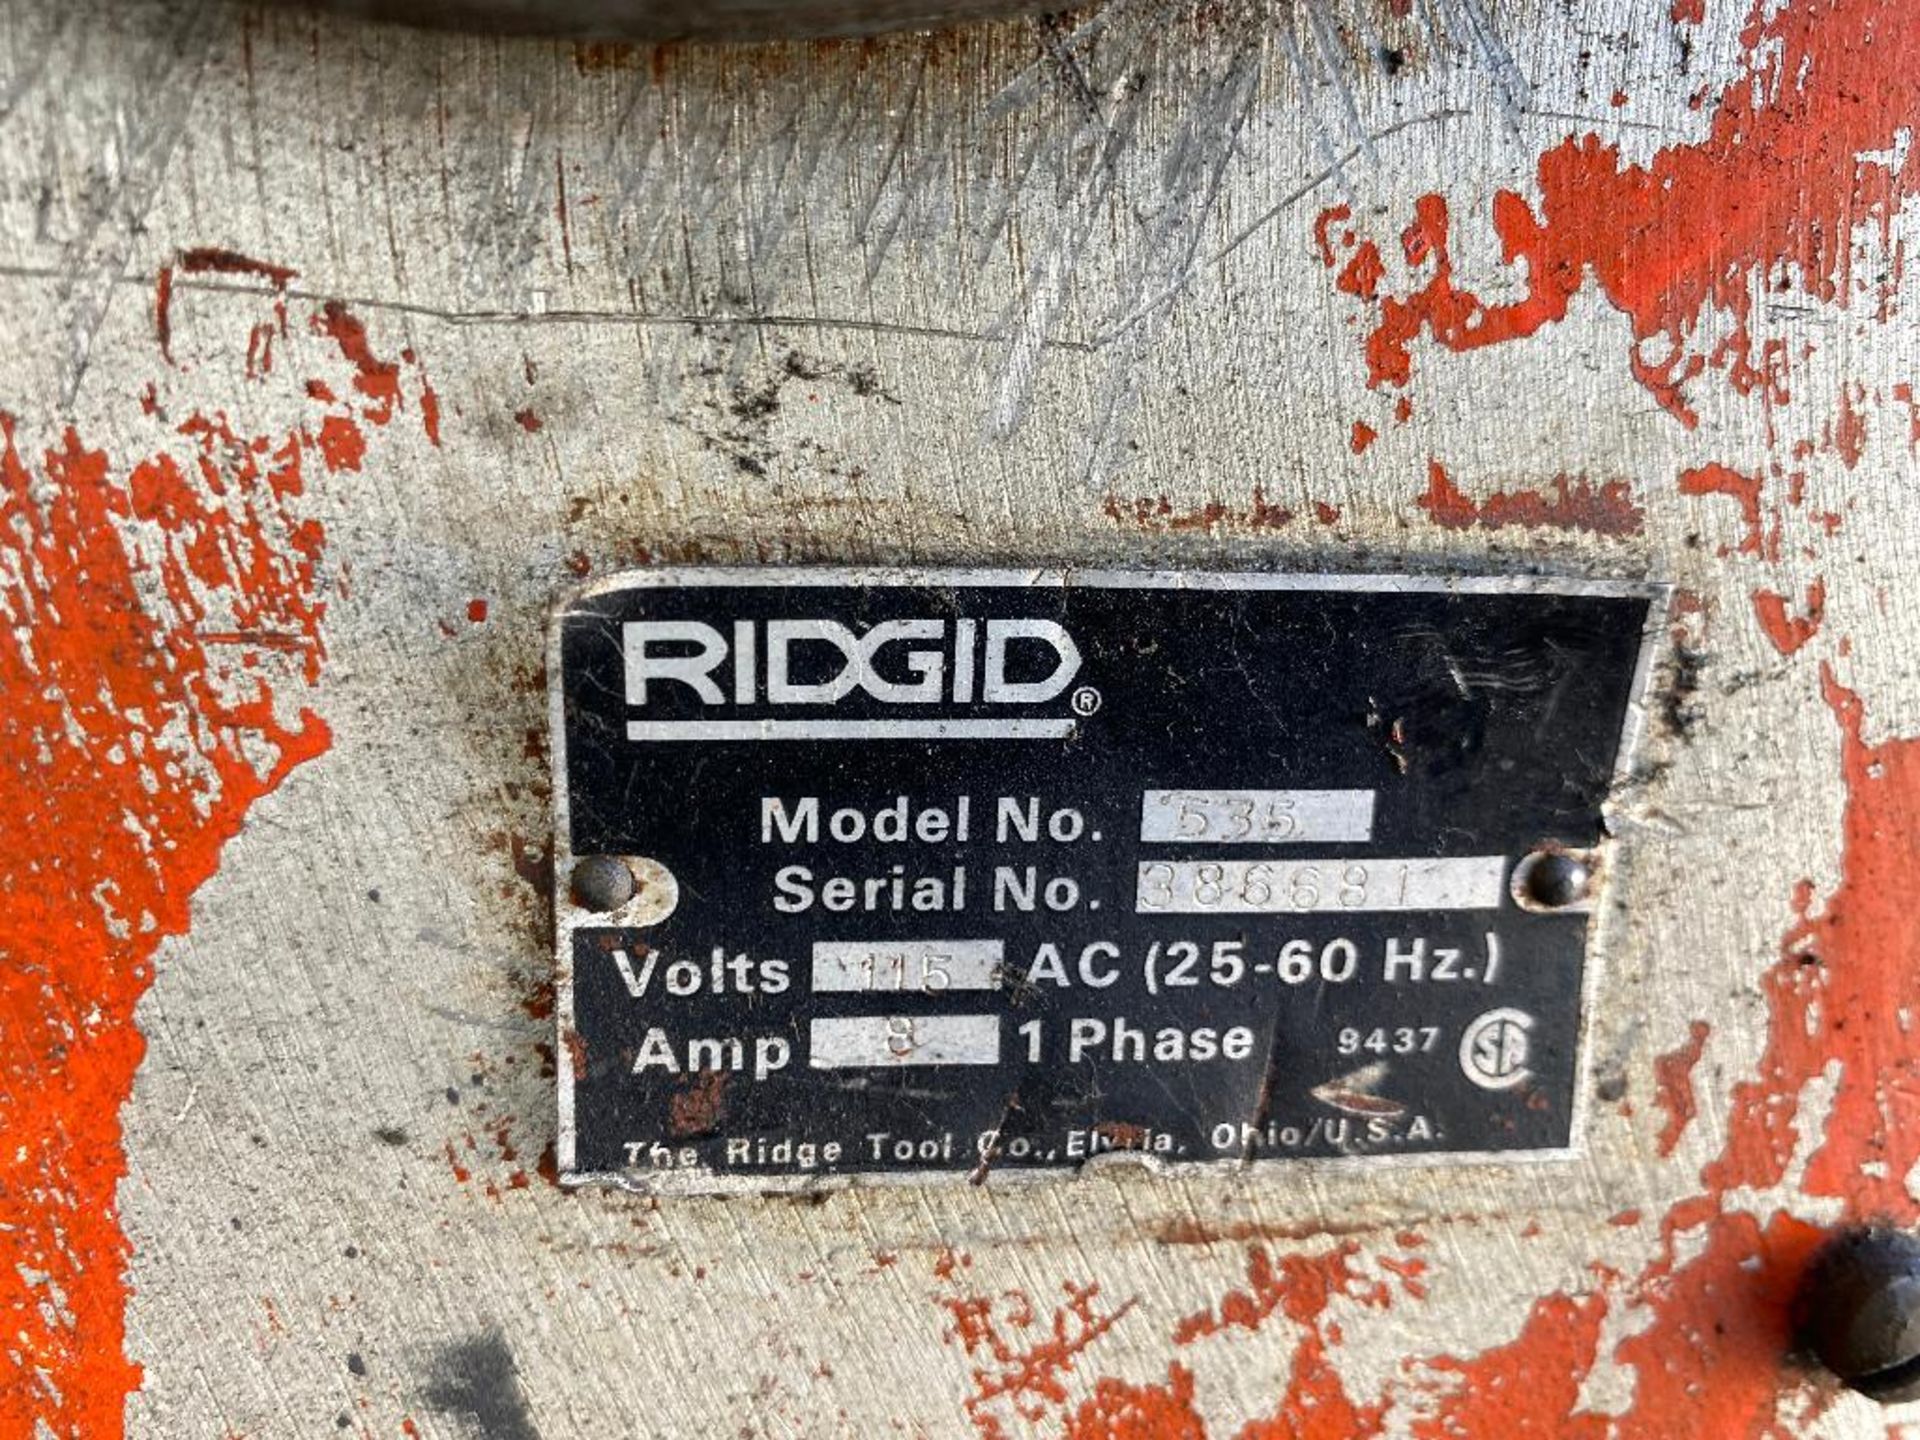 Ridgid 535 Threader w/ Pipe Cutter, Reamer, Die Heads, Foot Pedal, etc. - Image 5 of 5